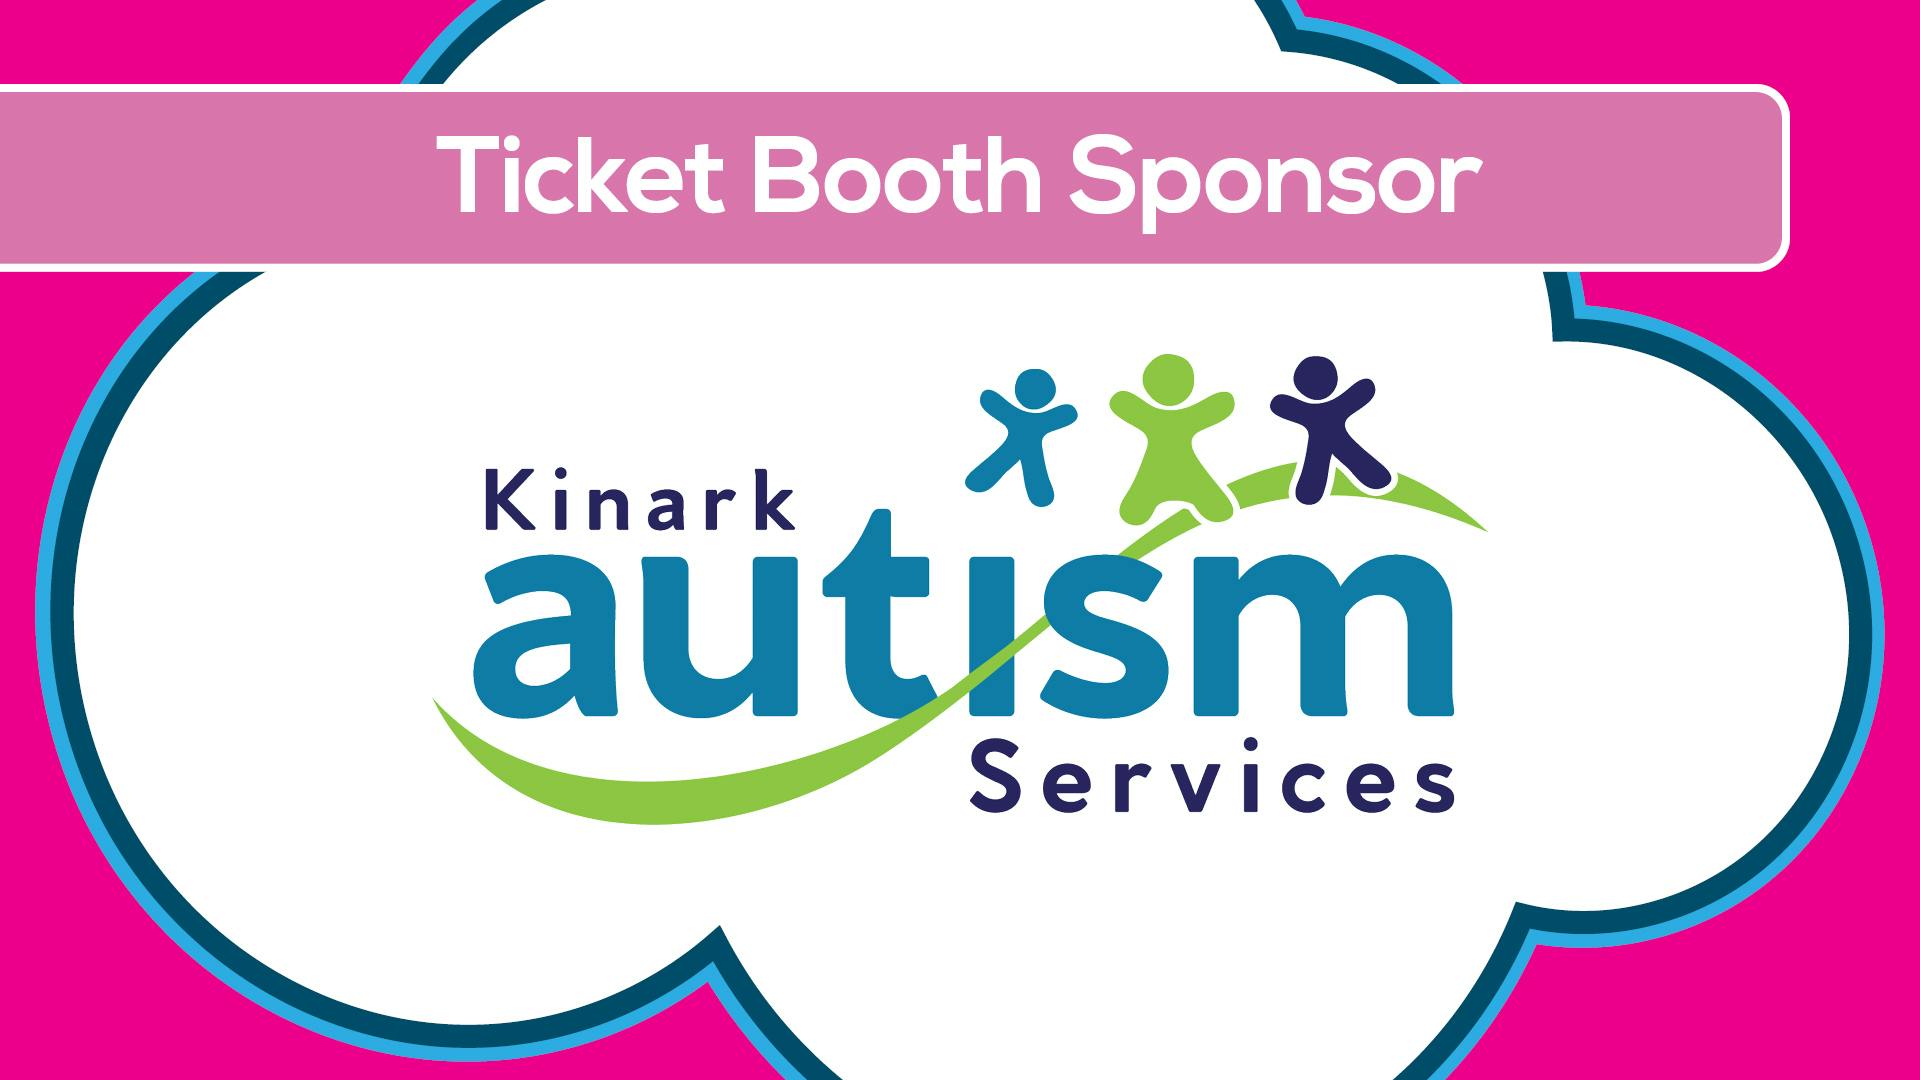 Kinark Autism Services - Ticket Booth Sponsor